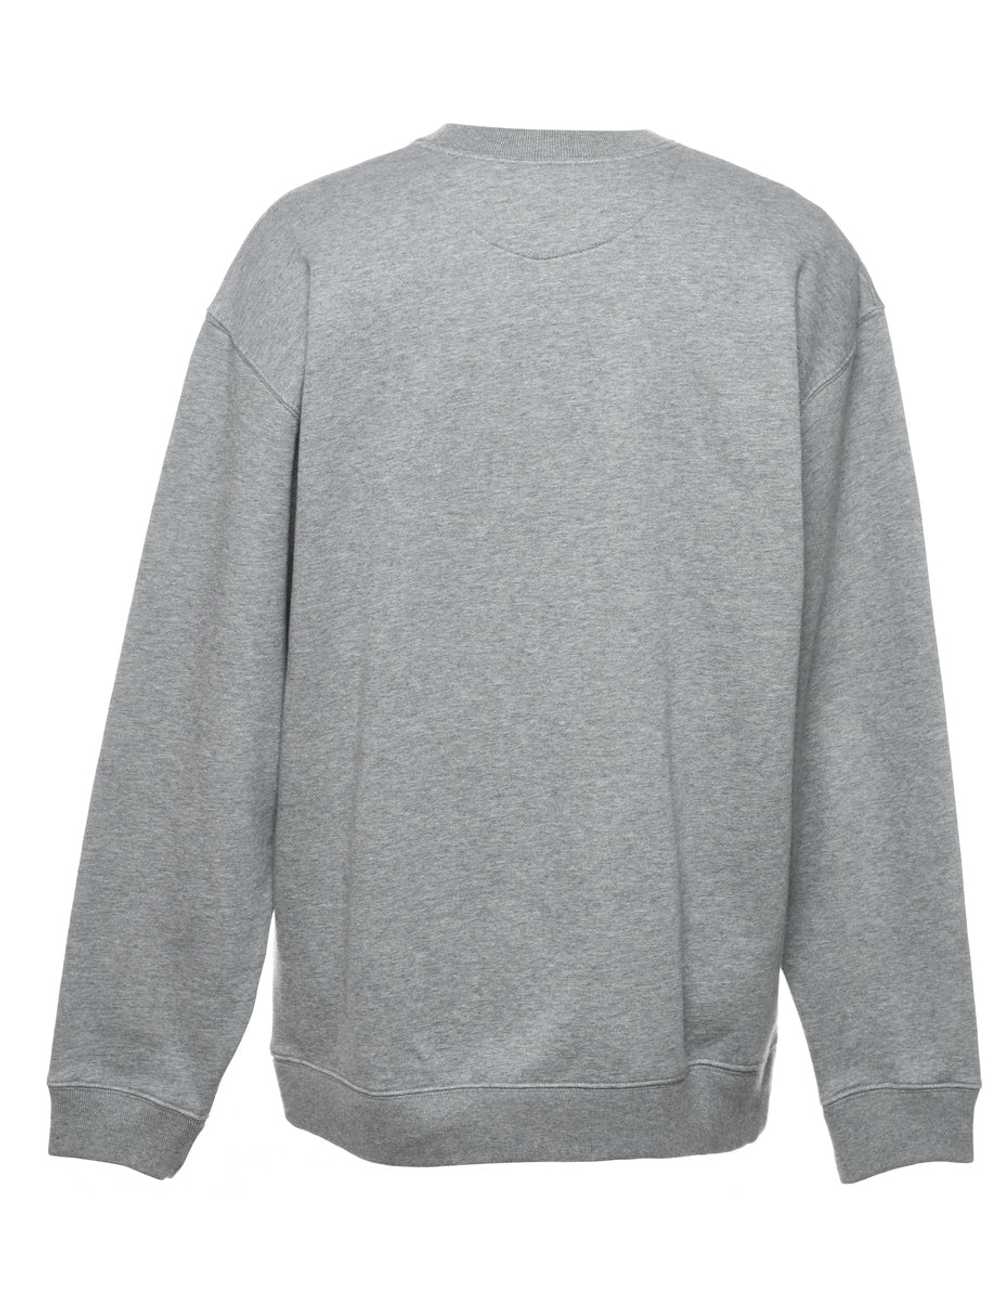 Marl Grey Timber Wolf Printed Sweatshirt - XL - image 2